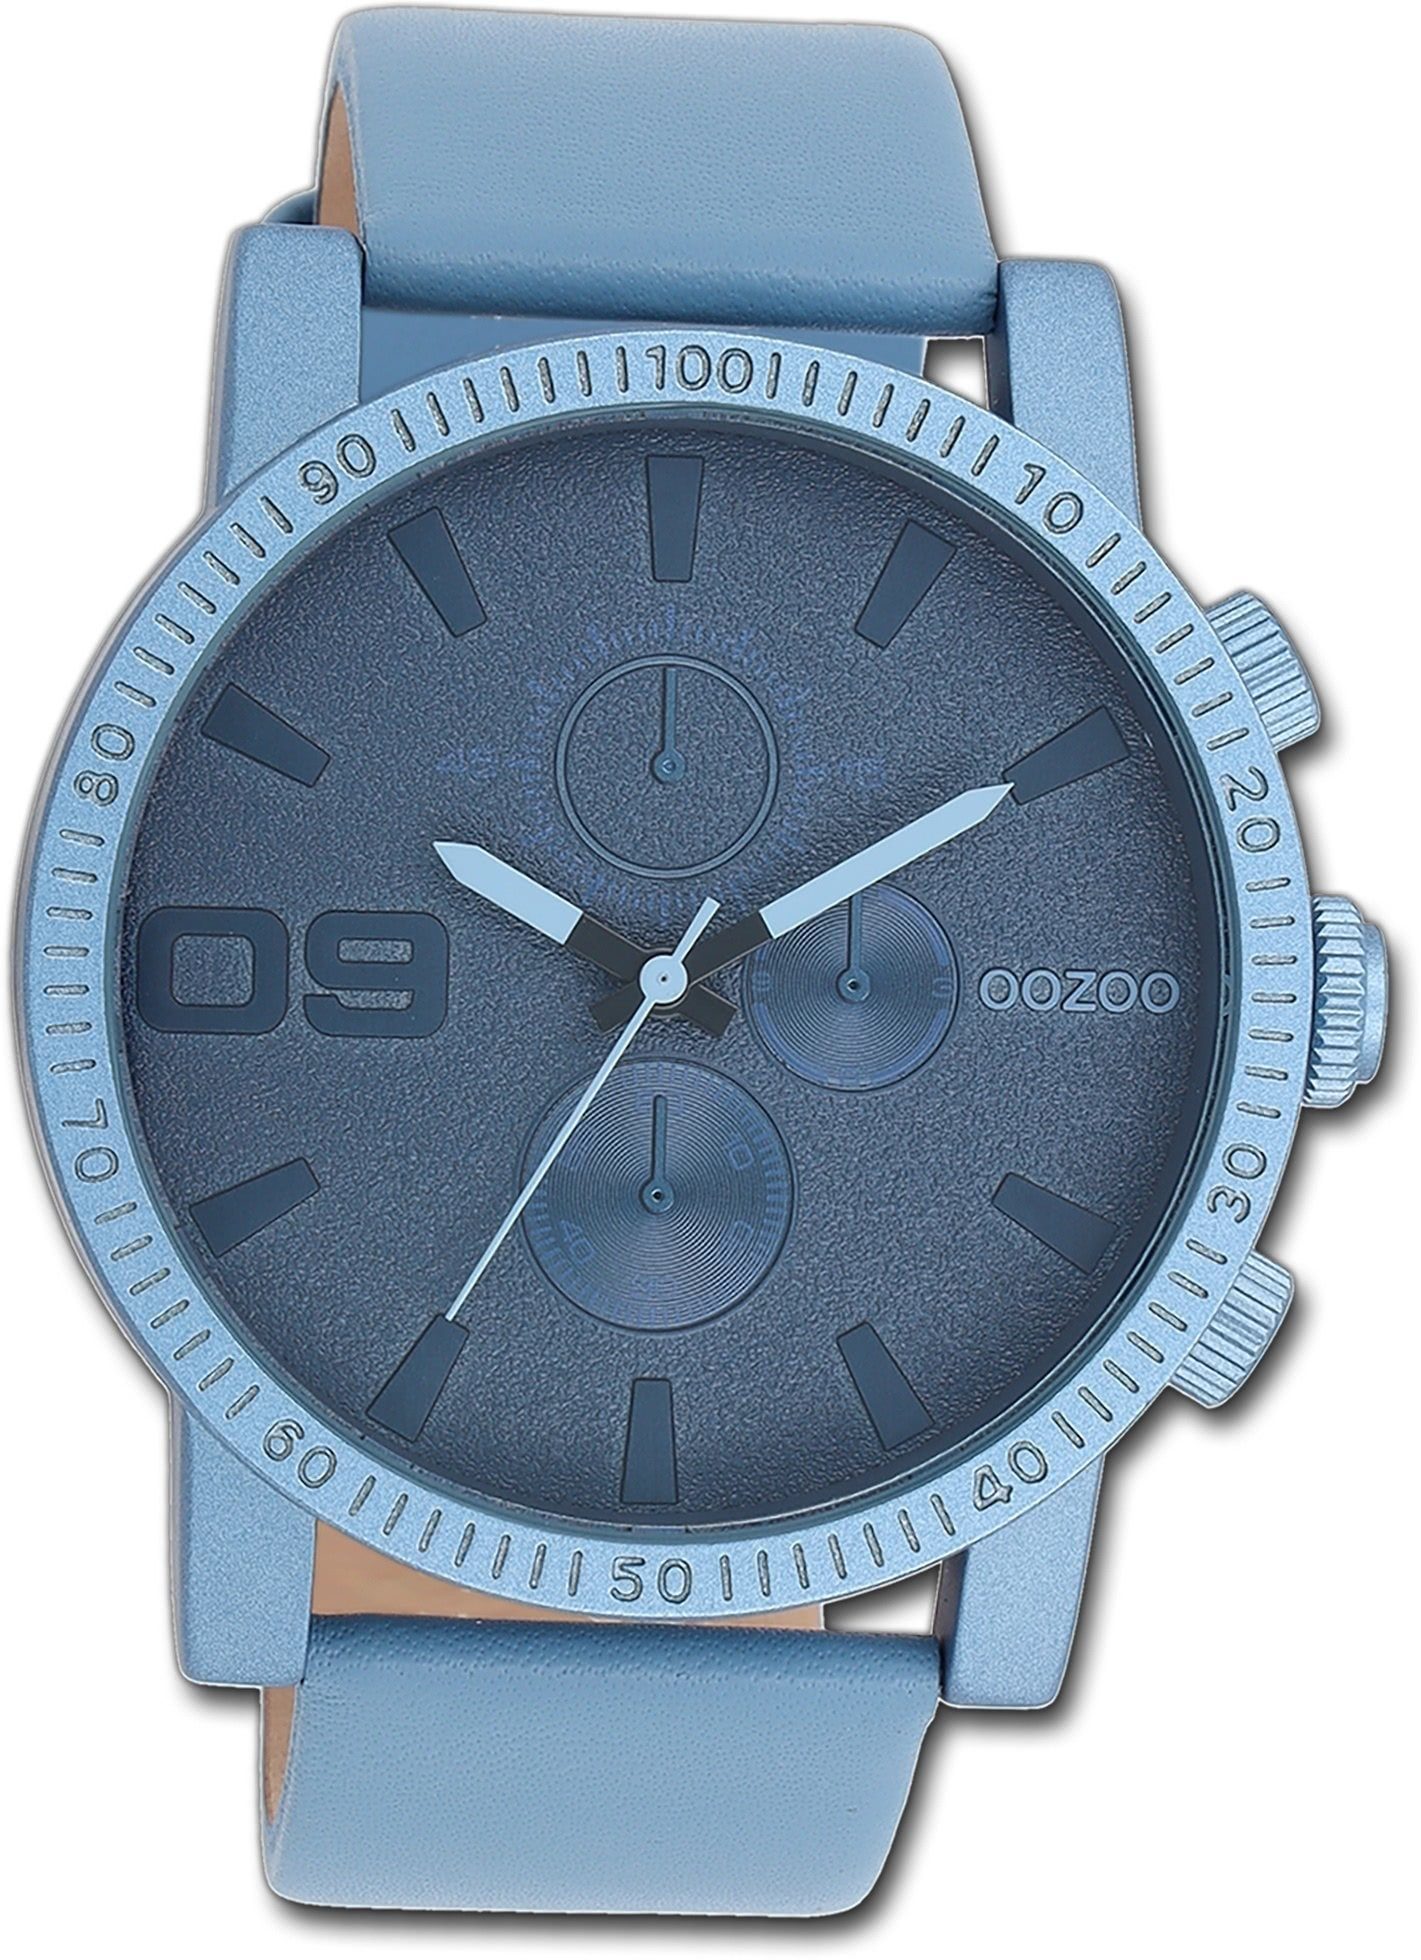 Gehäuse, Oozoo rundes Quarzuhr blau, OOZOO Damen, Herrenuhr groß Unisex (48mm) Armbanduhr Timepieces, Lederarmband extra